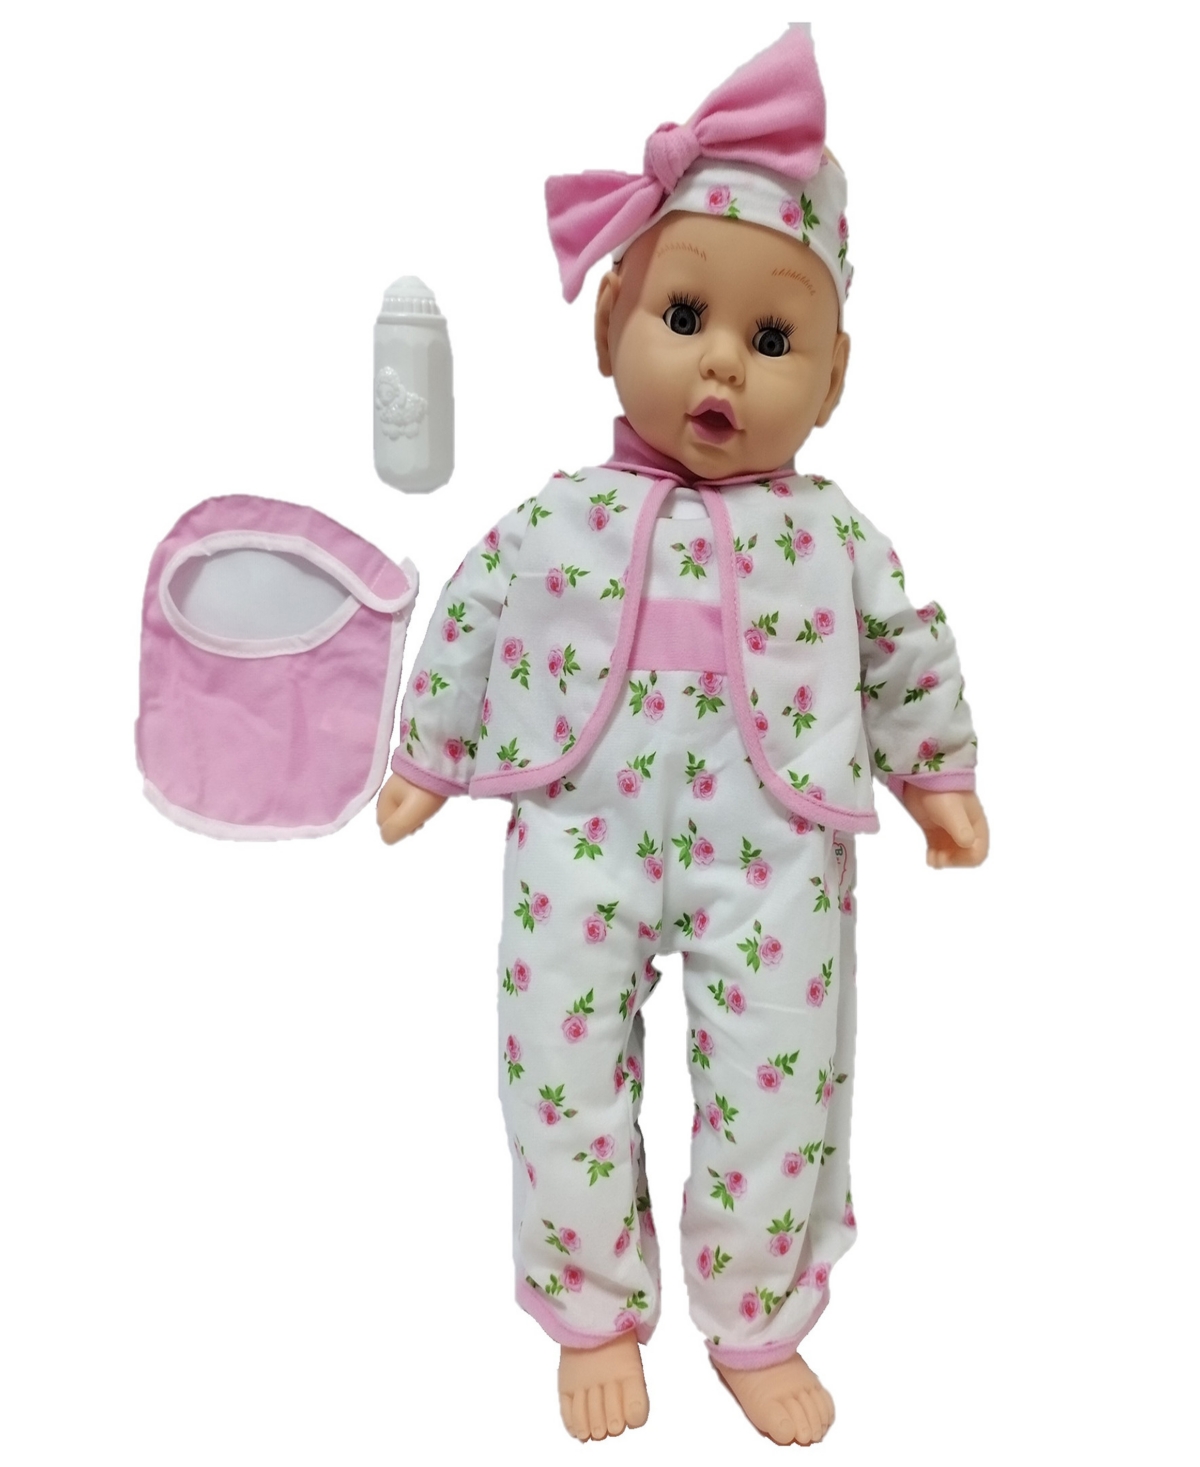 Shop Baby's First By Nemcor By Nemcor So Big Baby Baby Doll In Multi